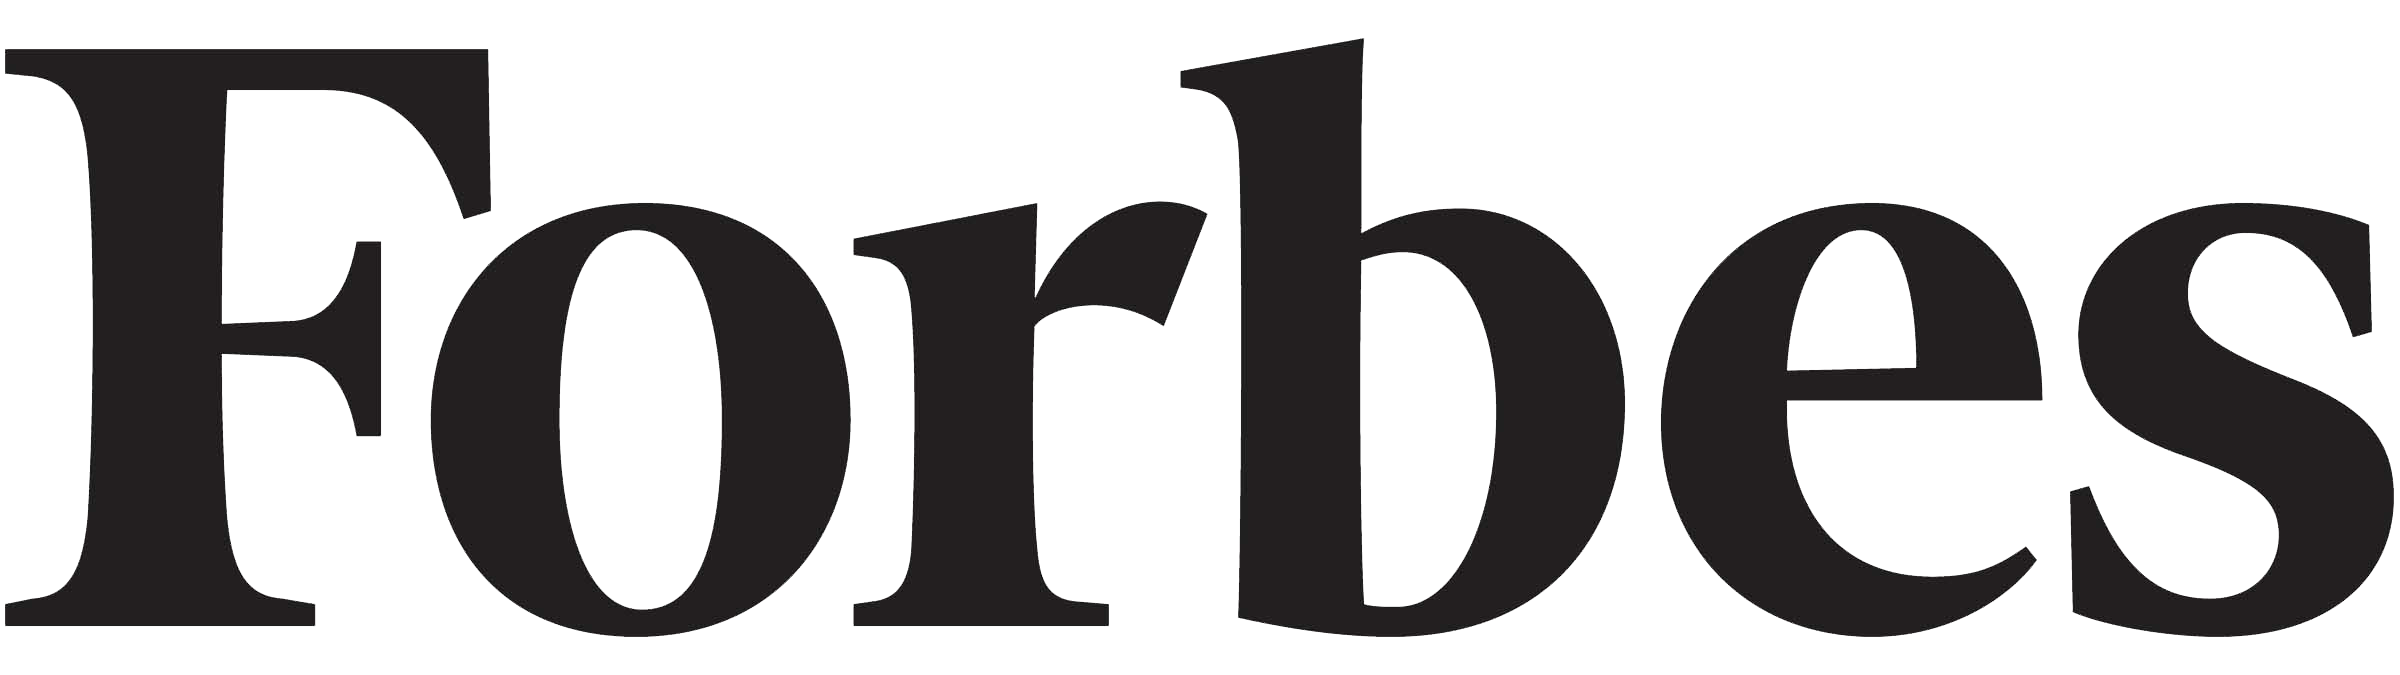 Logo Forbes noir HD